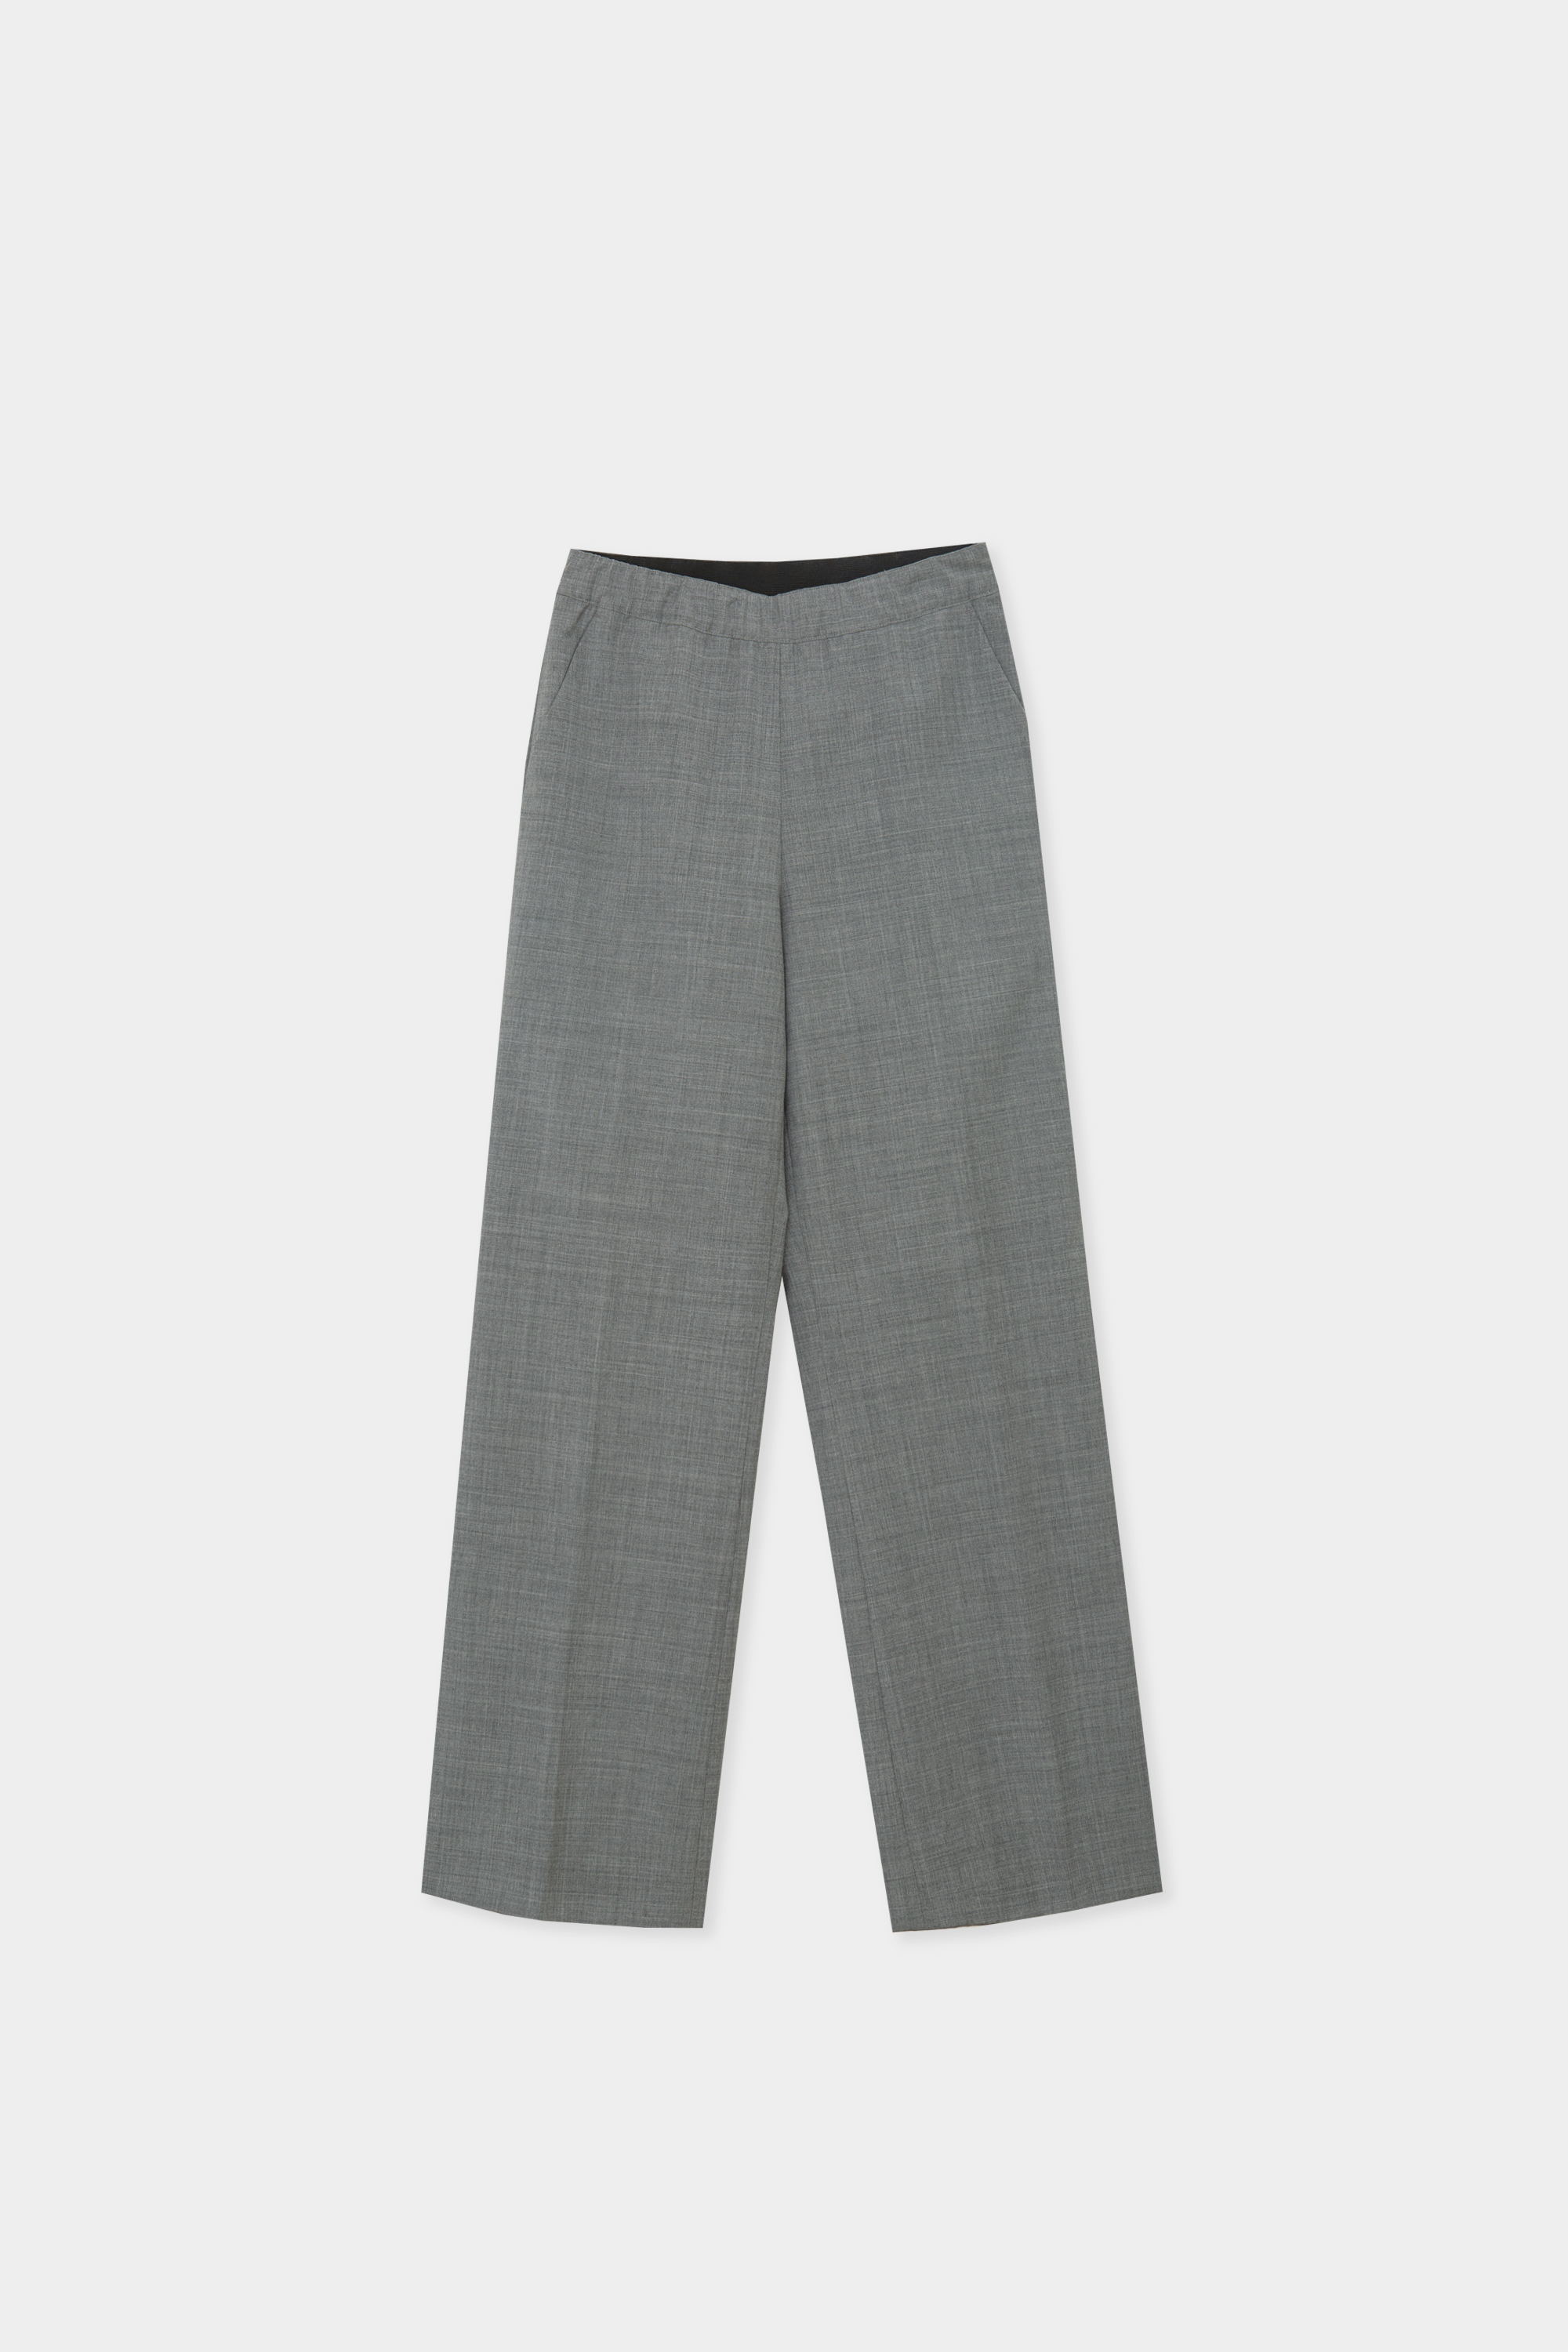 Summer Wool Boot Cut Pants (Grey)